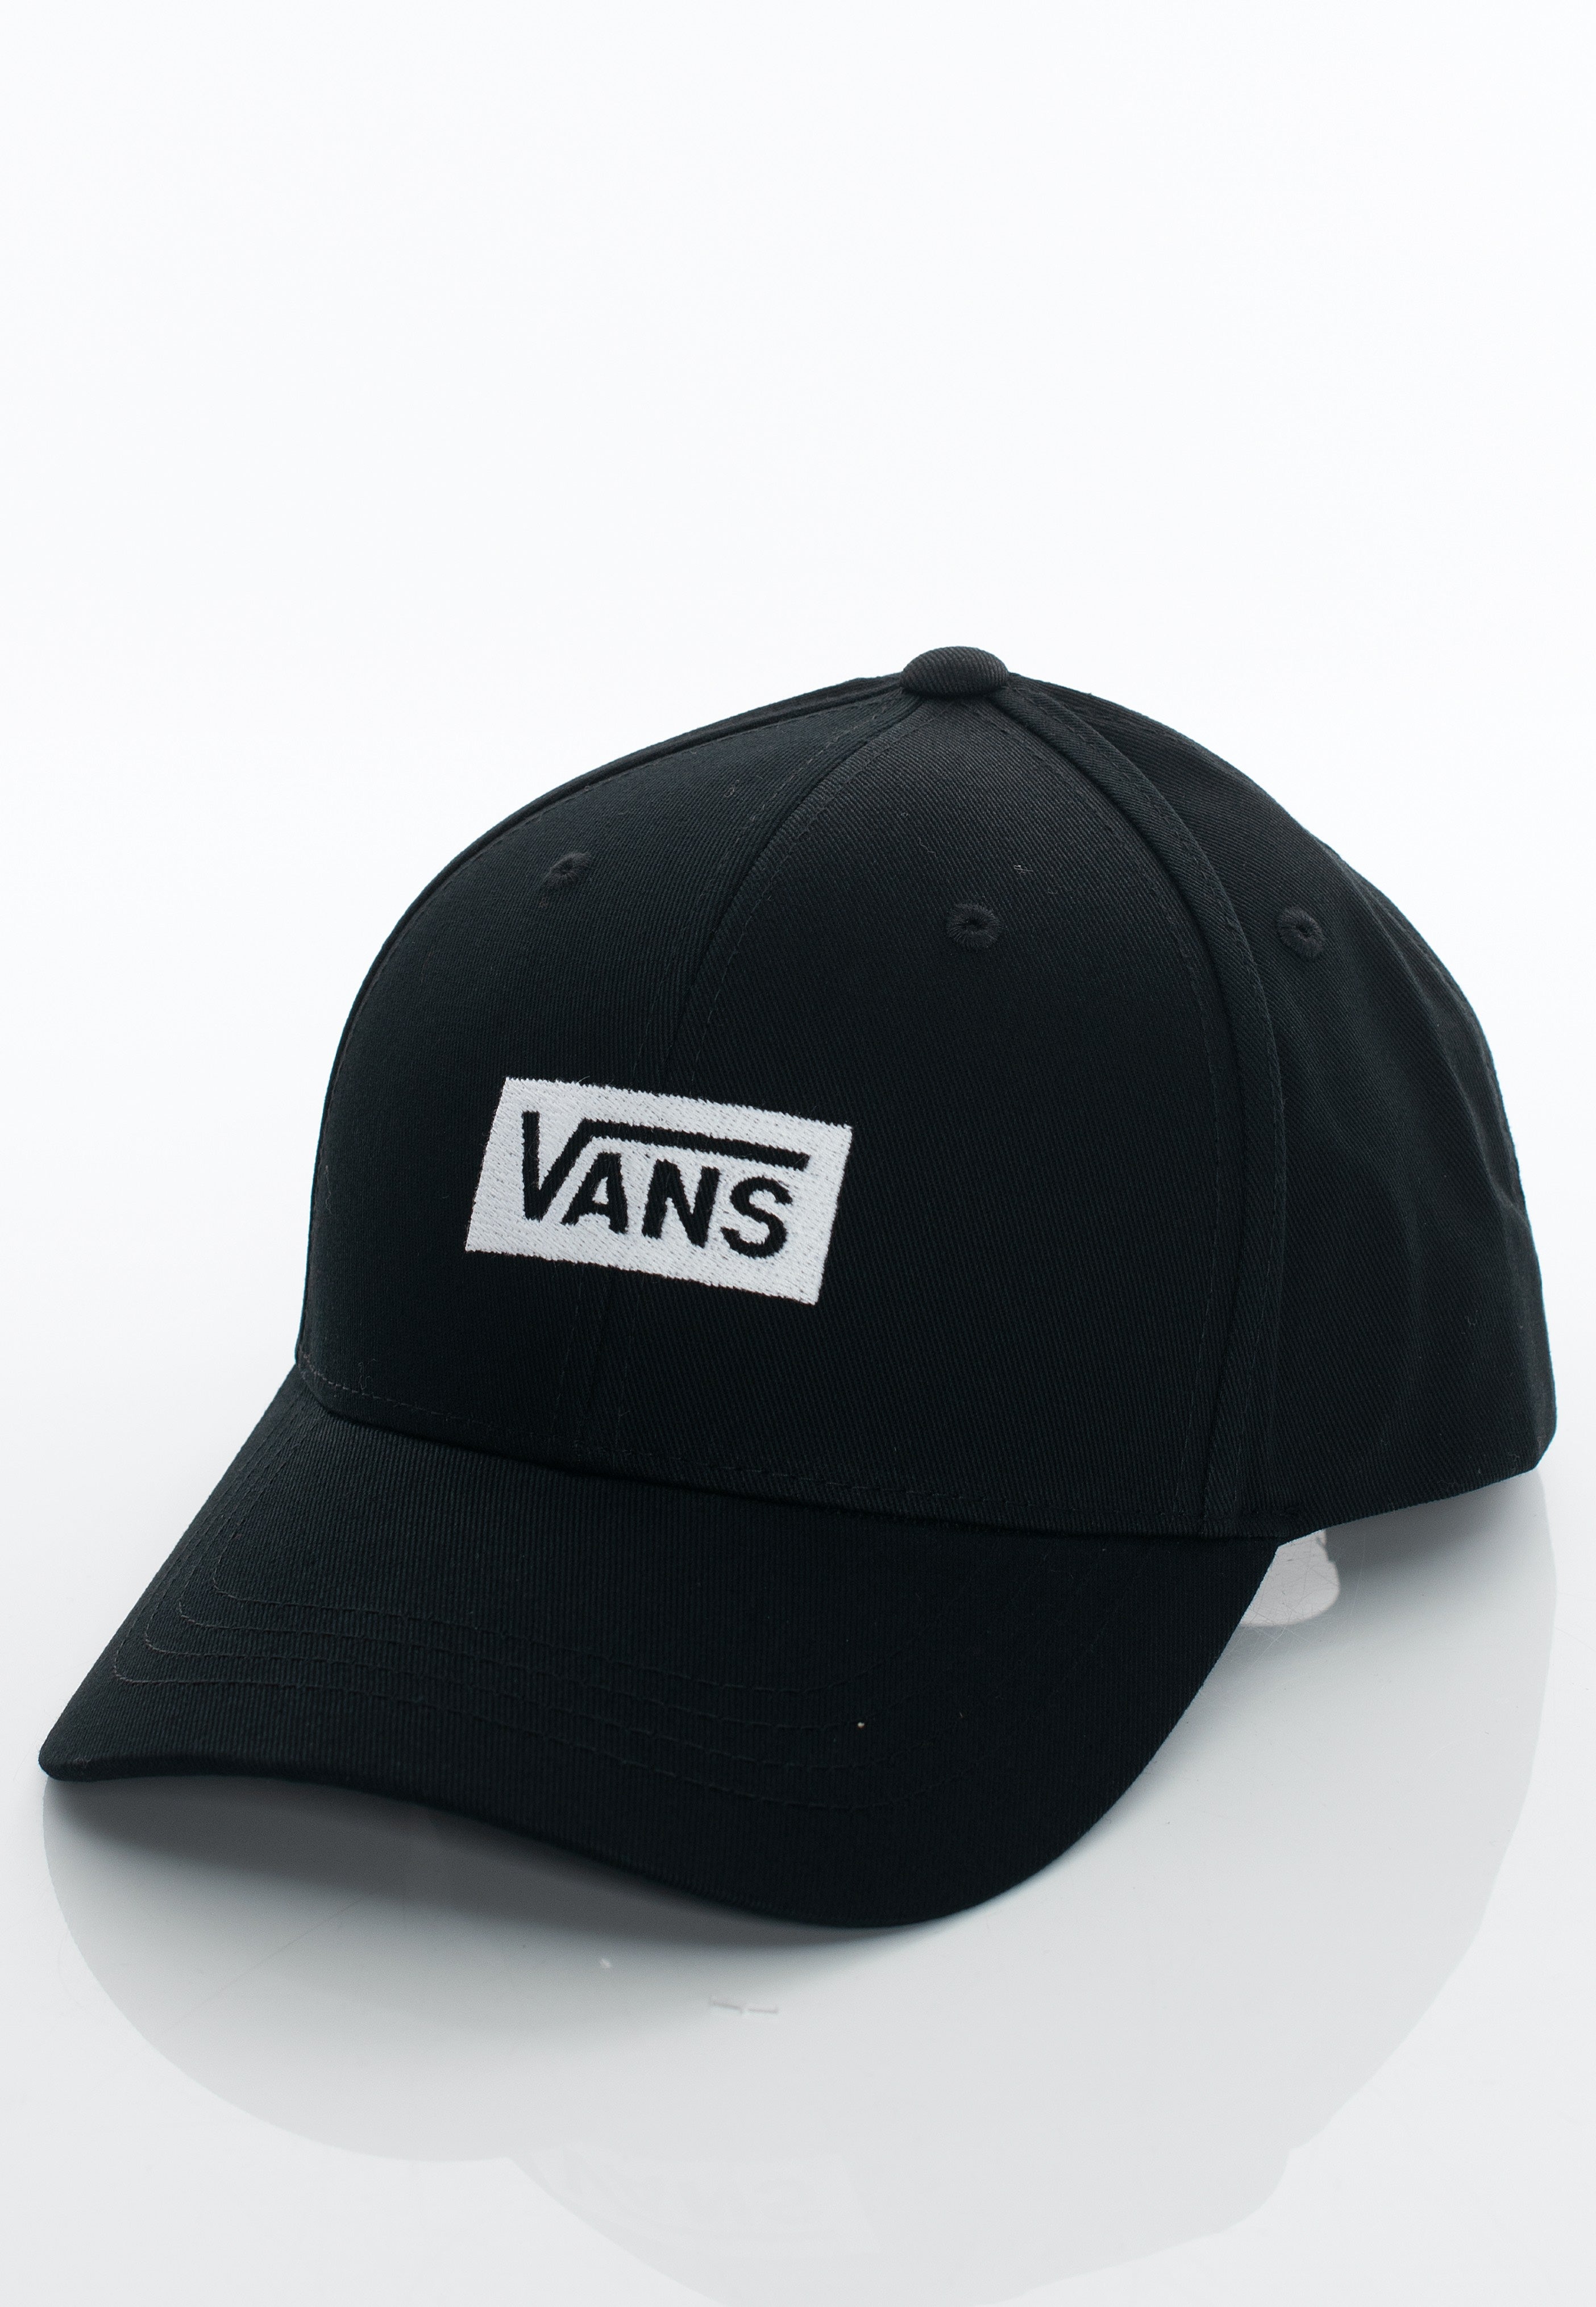 Vans - Boxed Structured Jockey Black - Cap